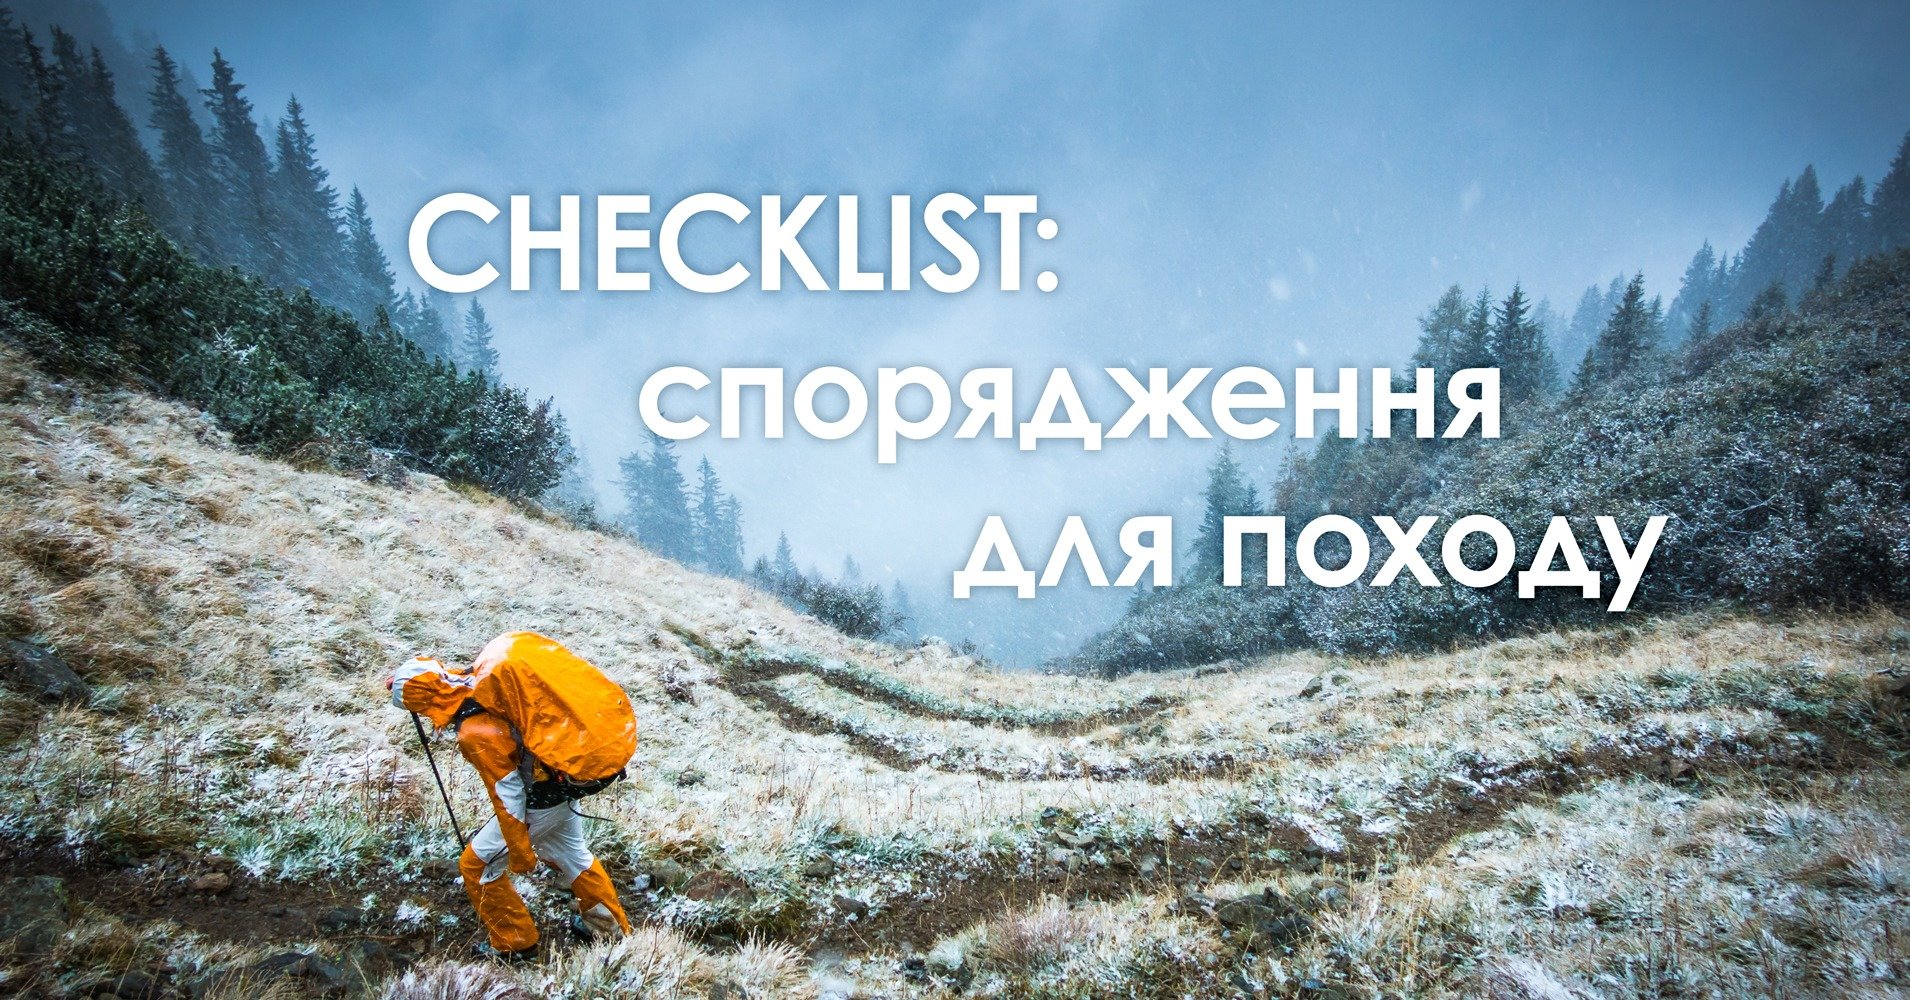 Hiking Checklist